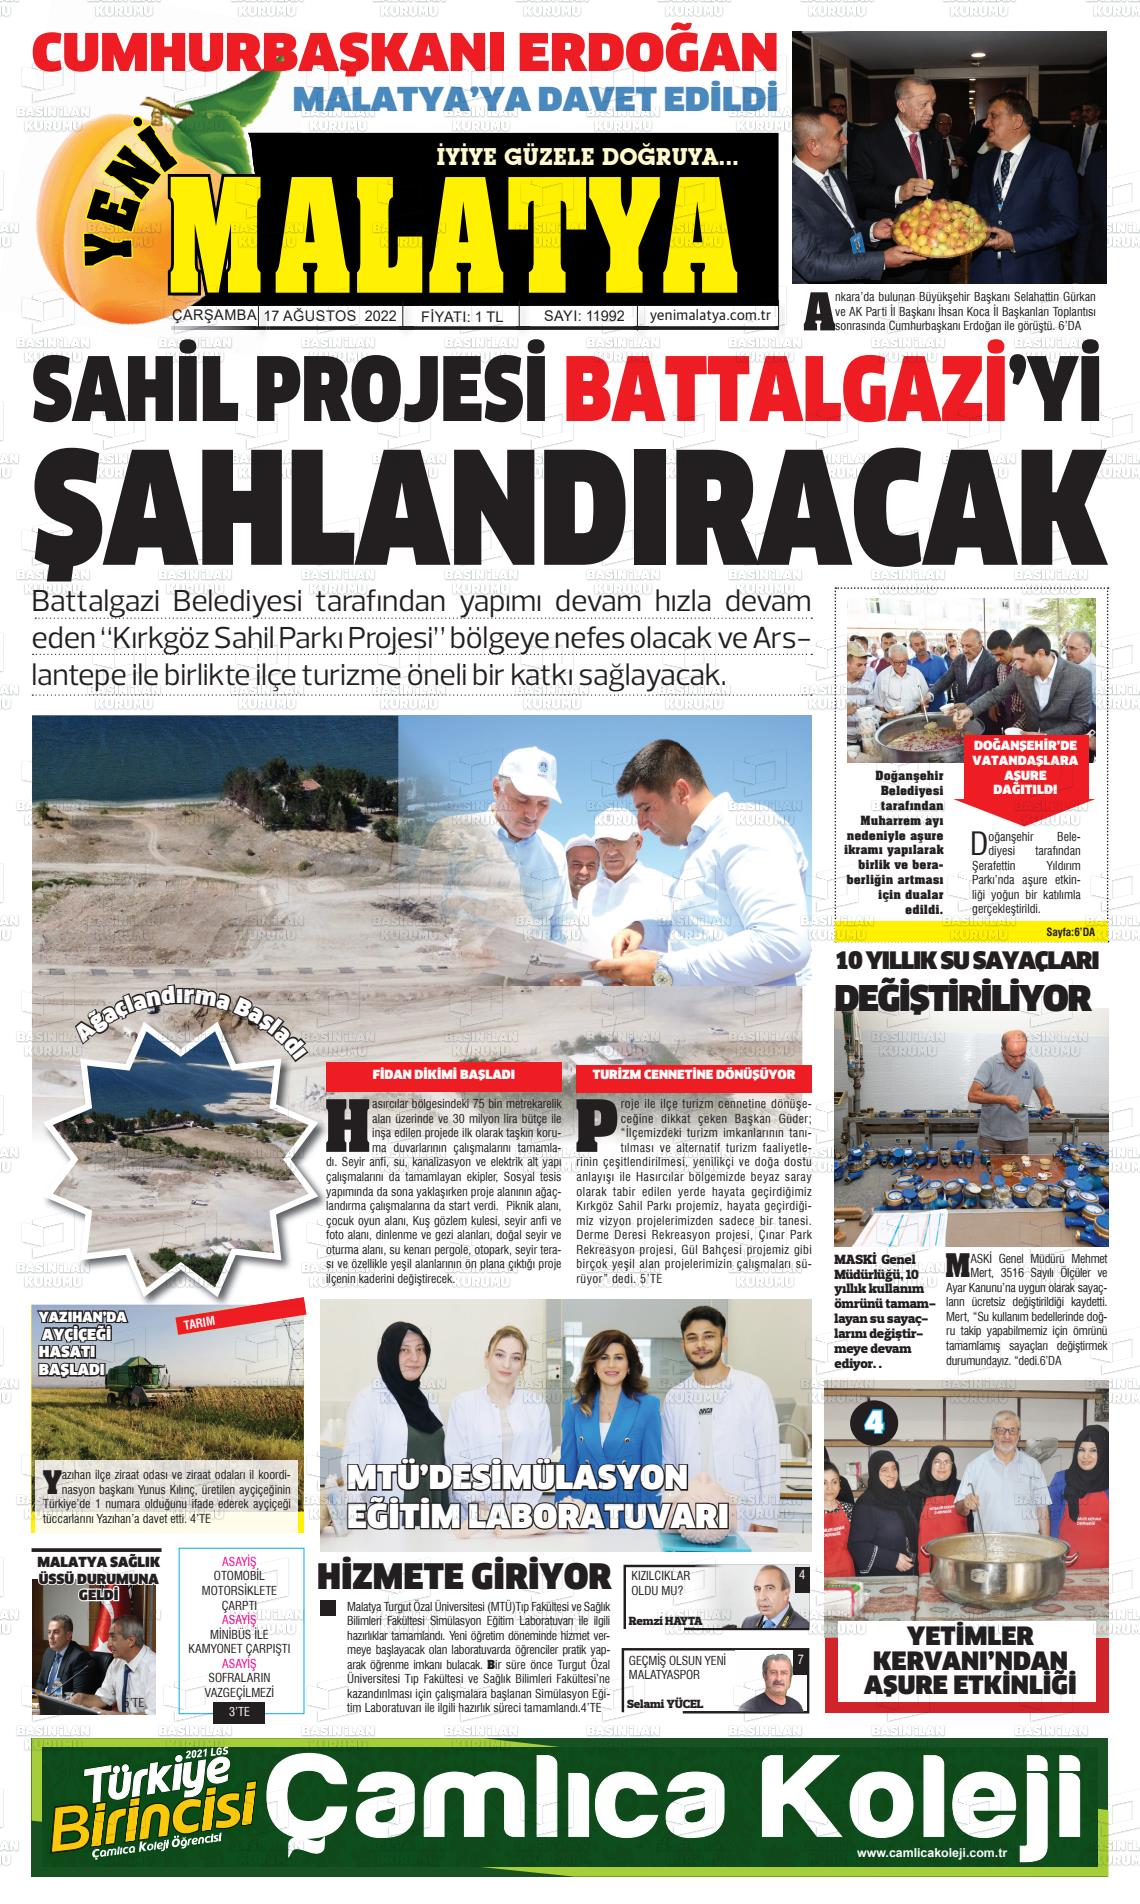 17 Ağustos 2022 Yeni Malatya Gazete Manşeti